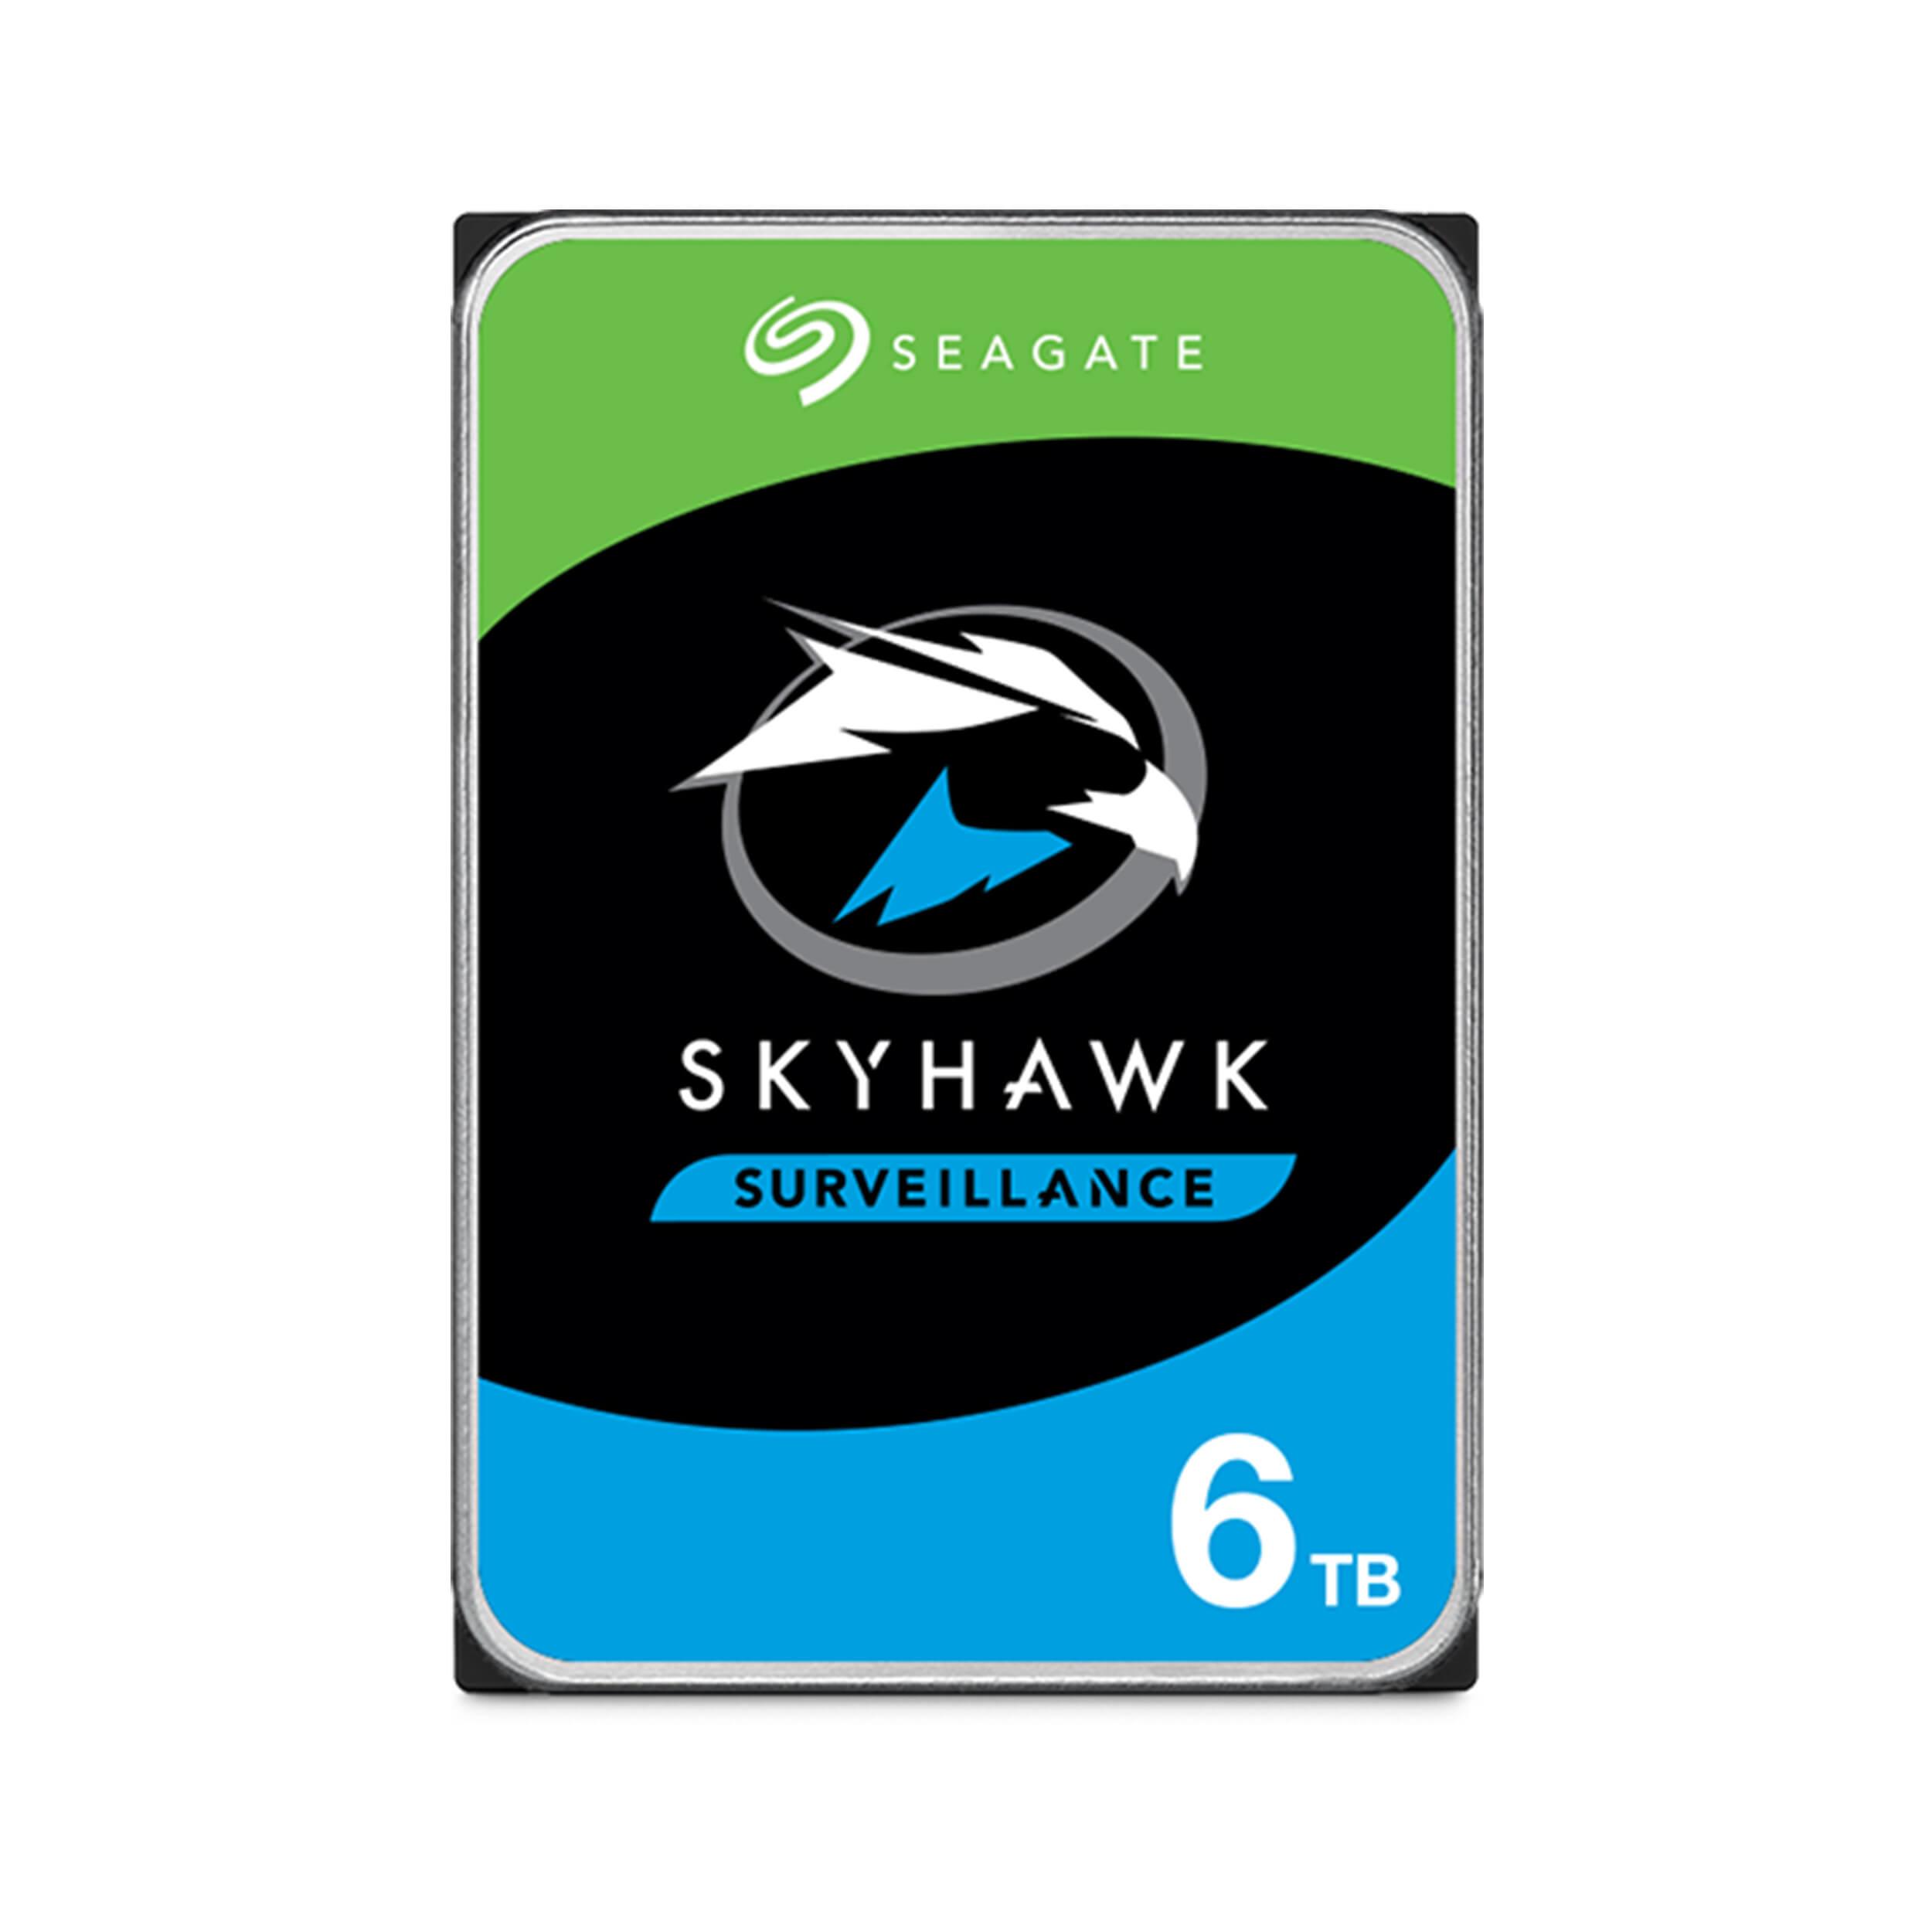 6tb seagate skyhawk